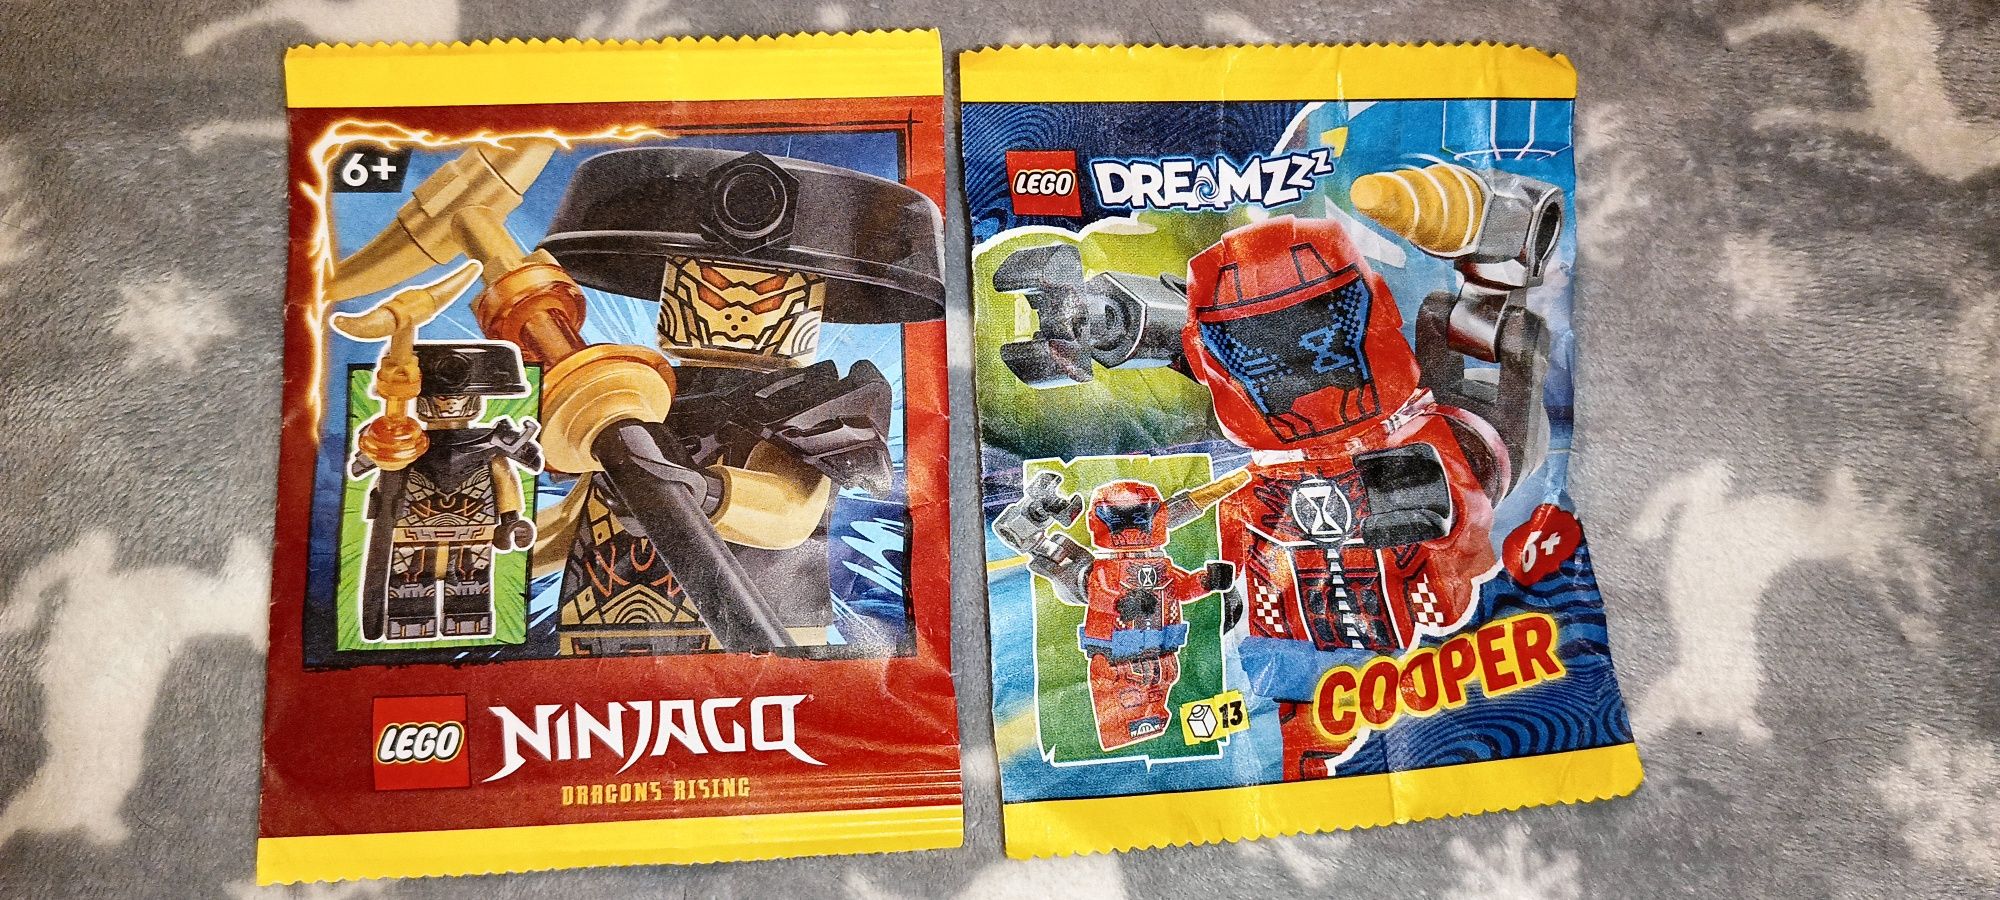 Saszetki LEGO Ninjago/dreamz i inne